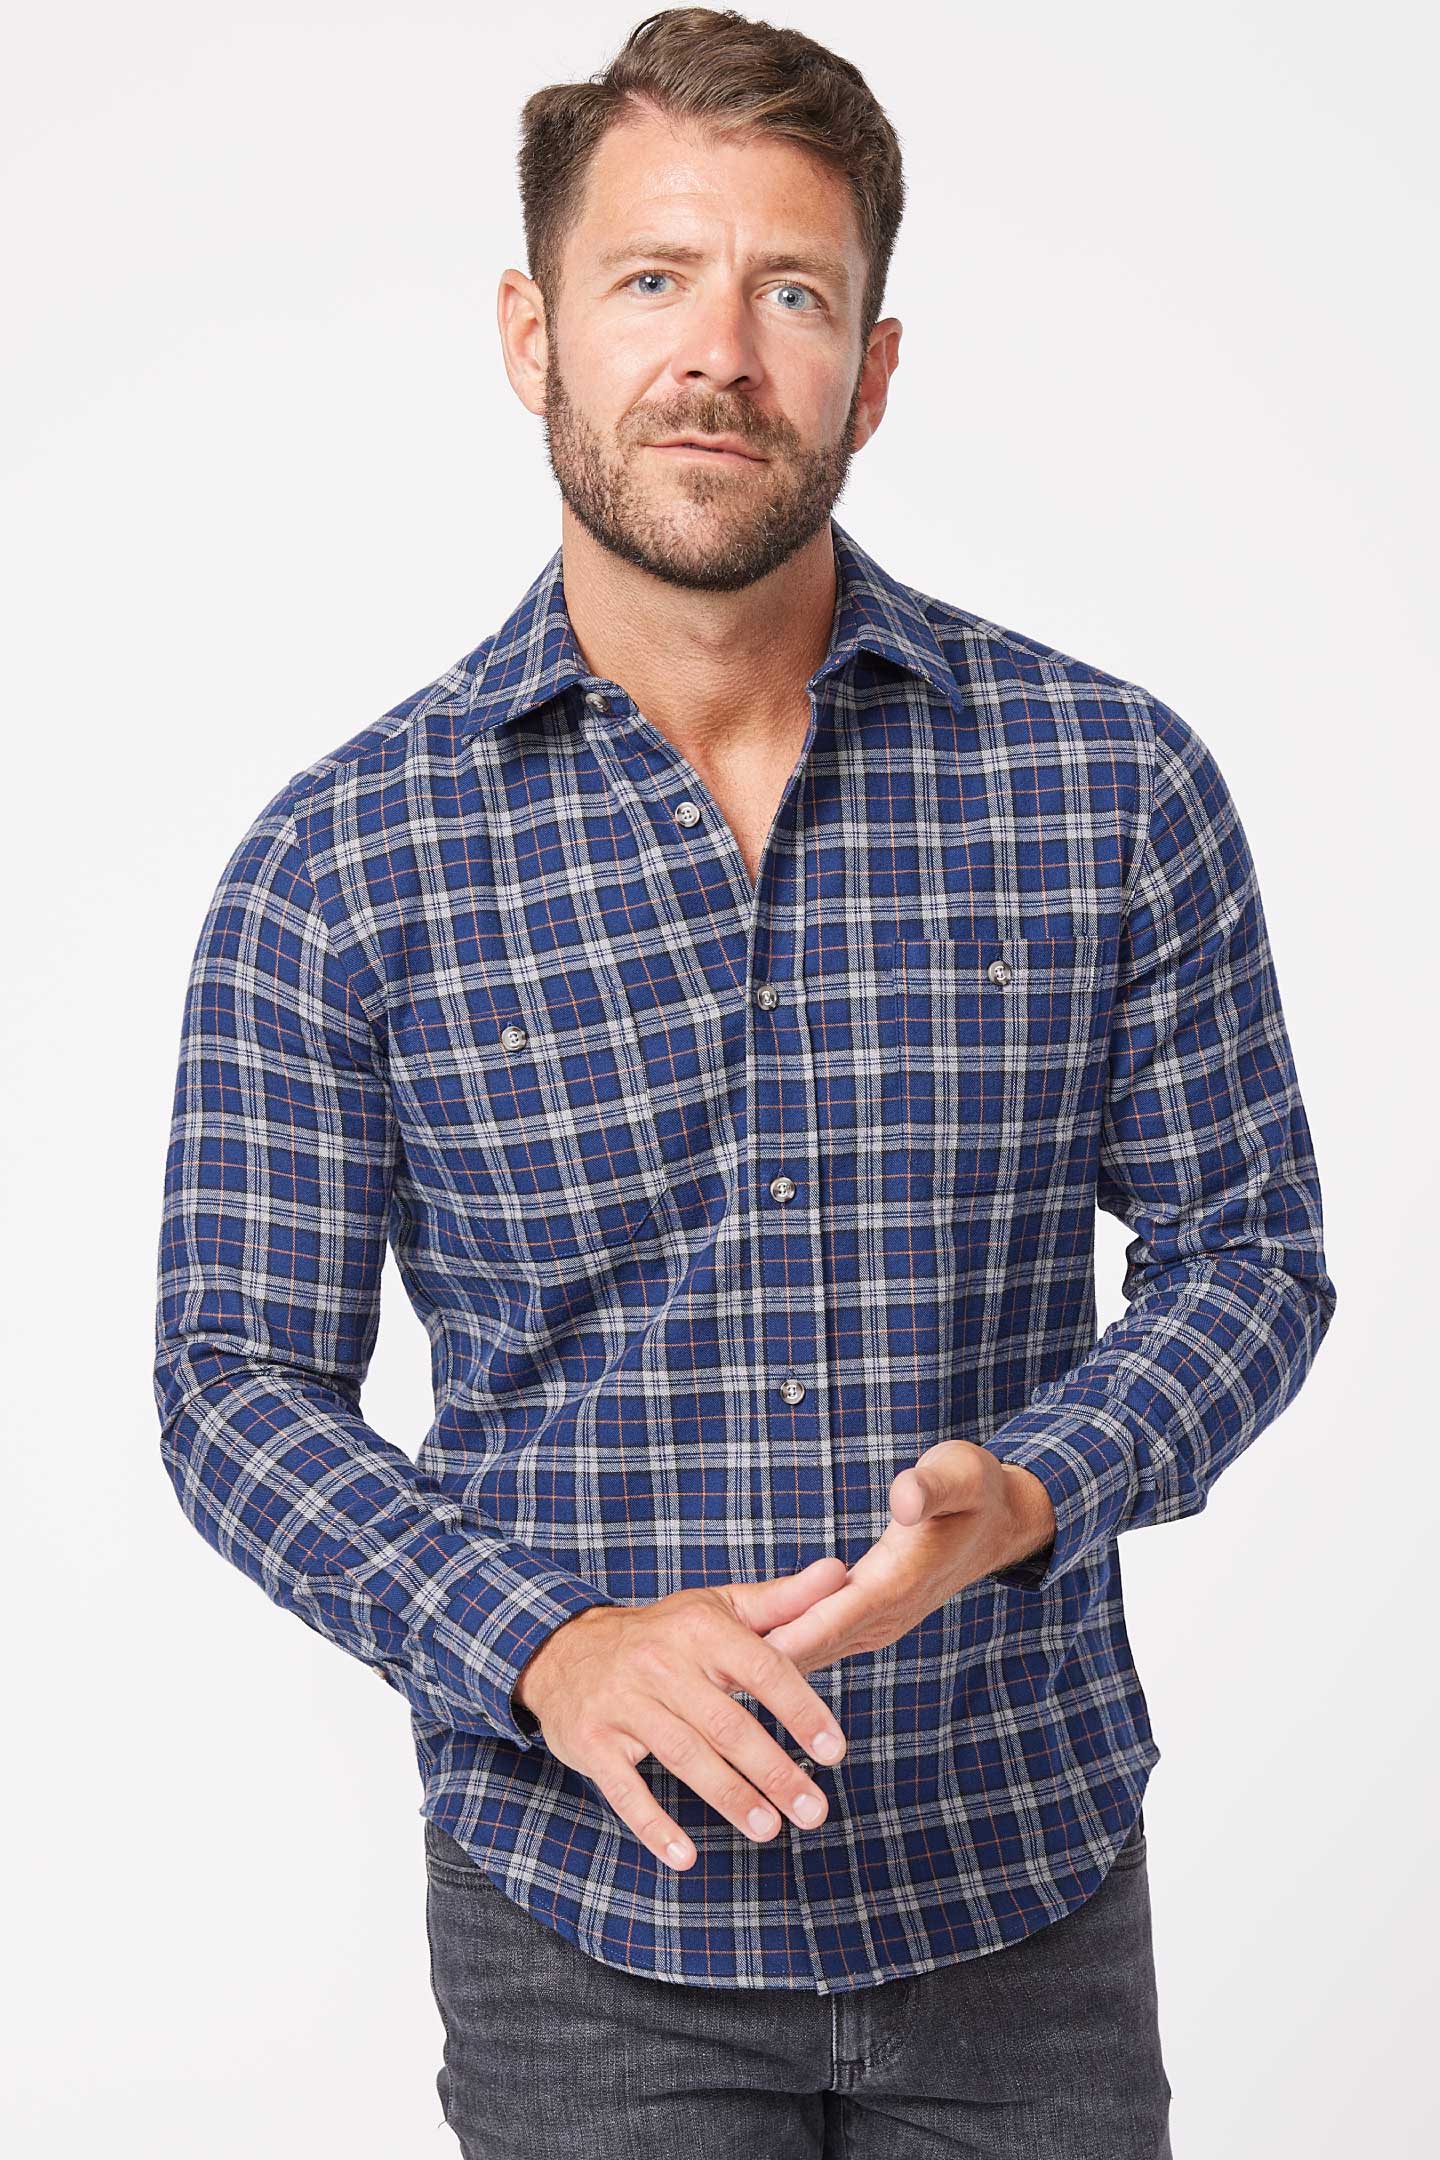 Plaid flannel shirt for short men